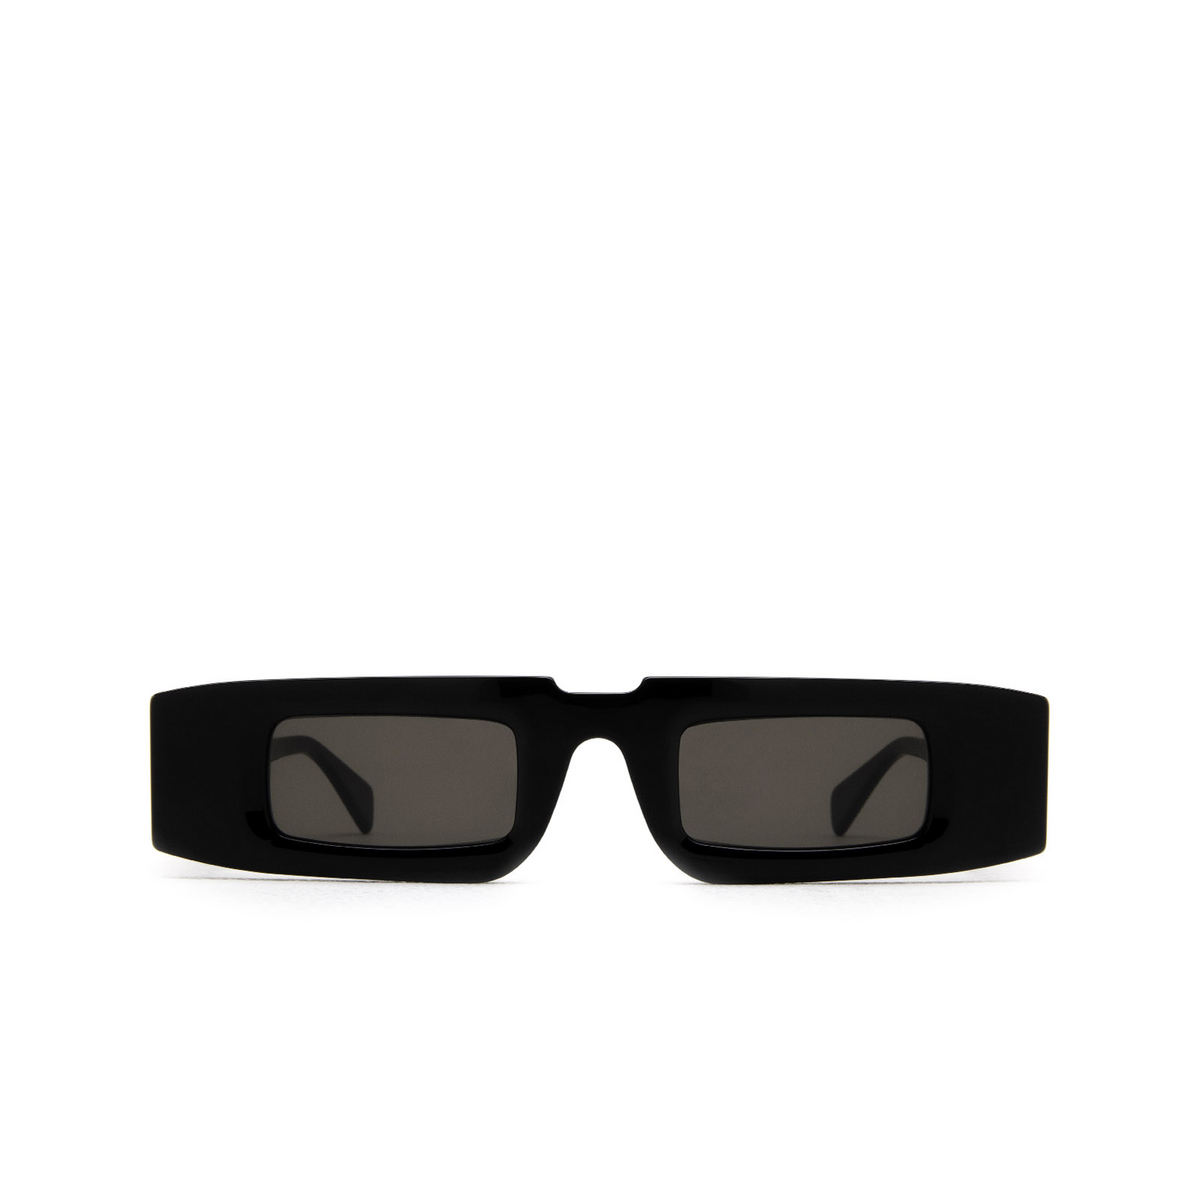 Kuboraum® Rectangle Sunglasses: X5 color Black Shine Bs - front view.